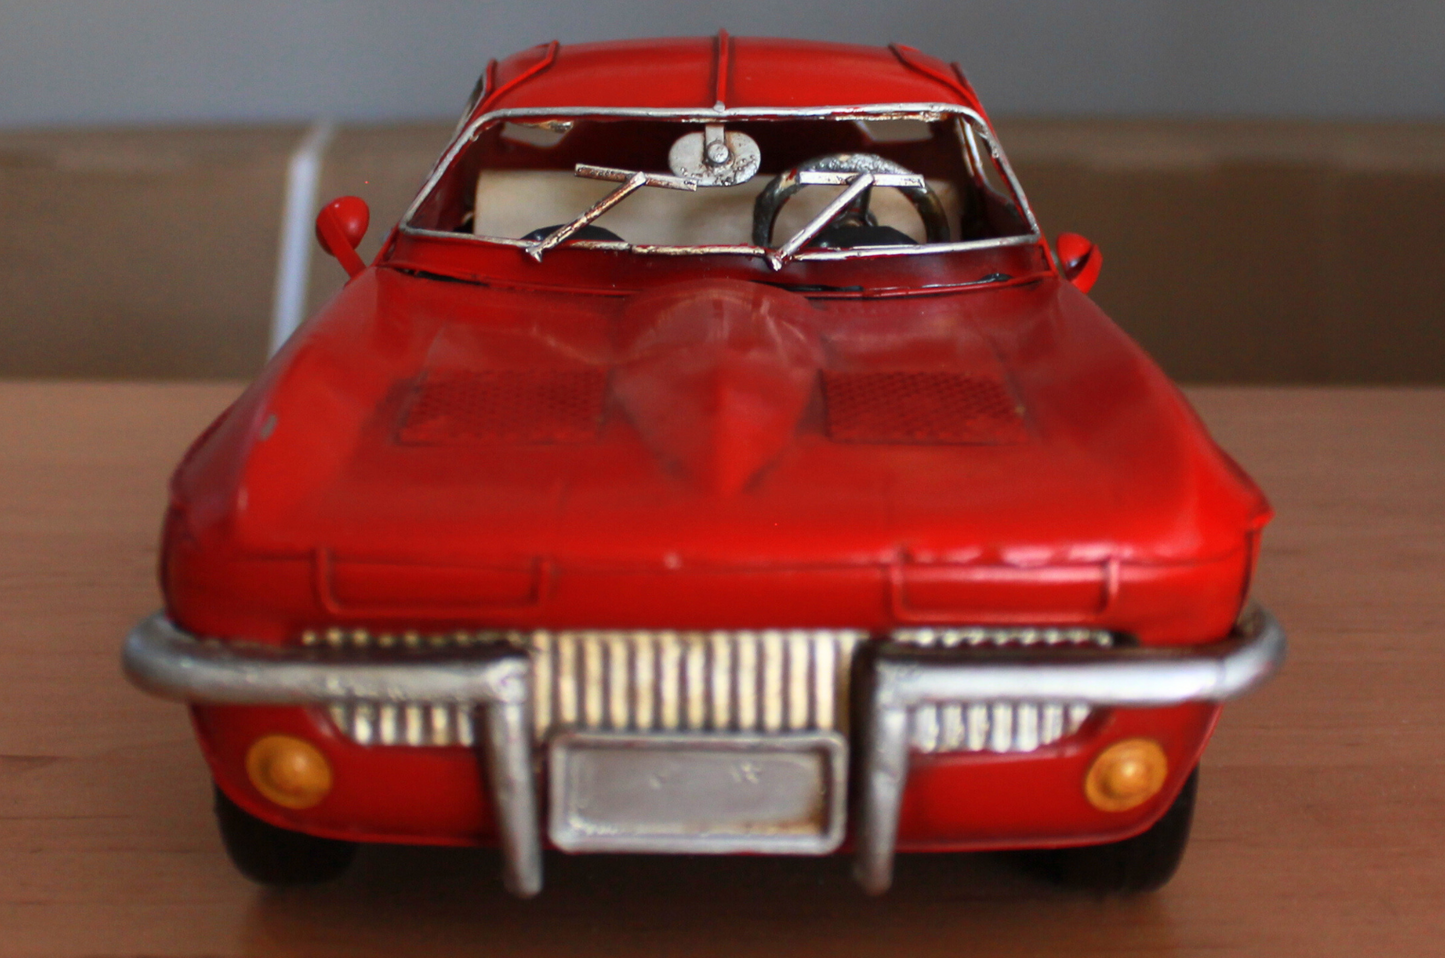 1963-1967 Red Chevrolet Corvette 1:8 Scale Car Model